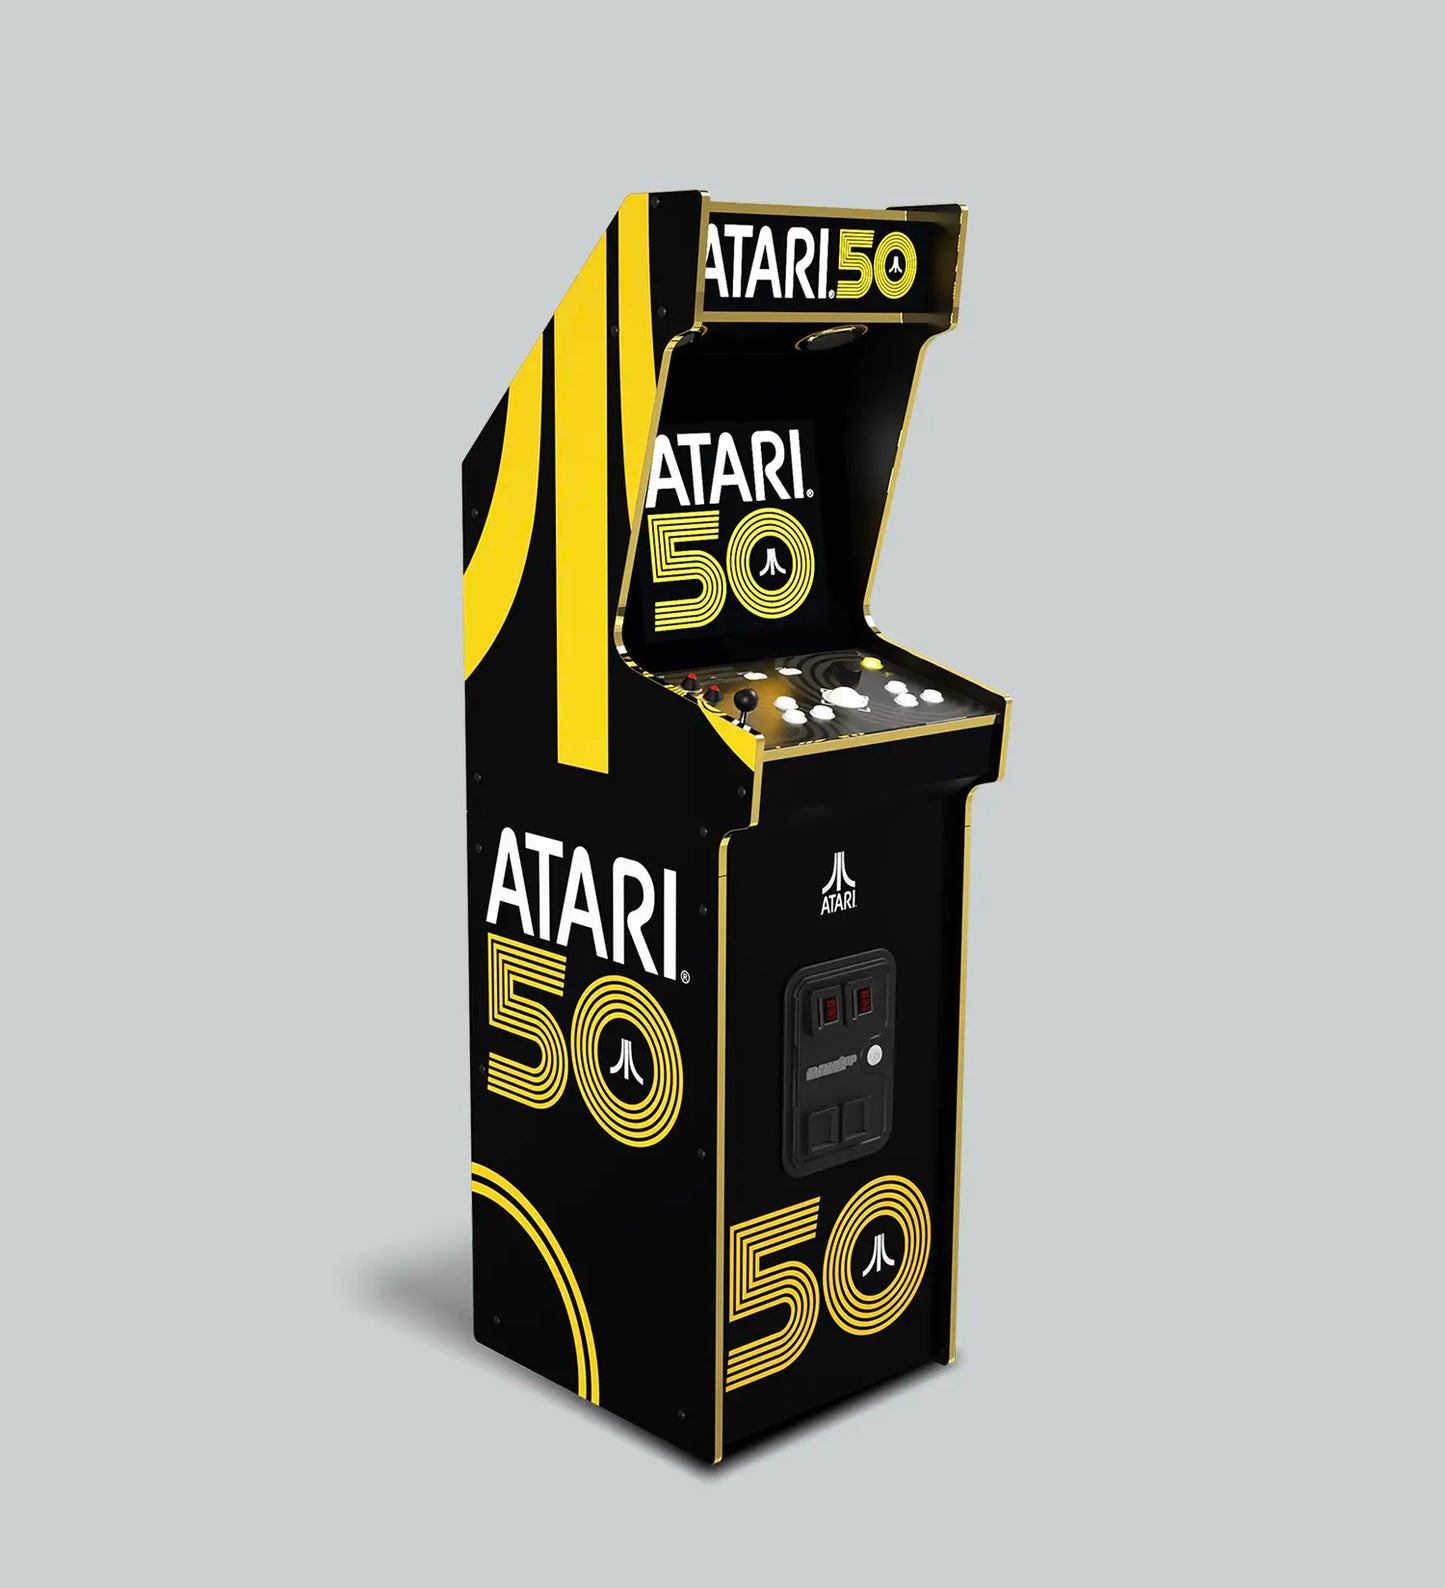 Arcade1Up Atari 50th Anniversary Deluxe Arcade Machine